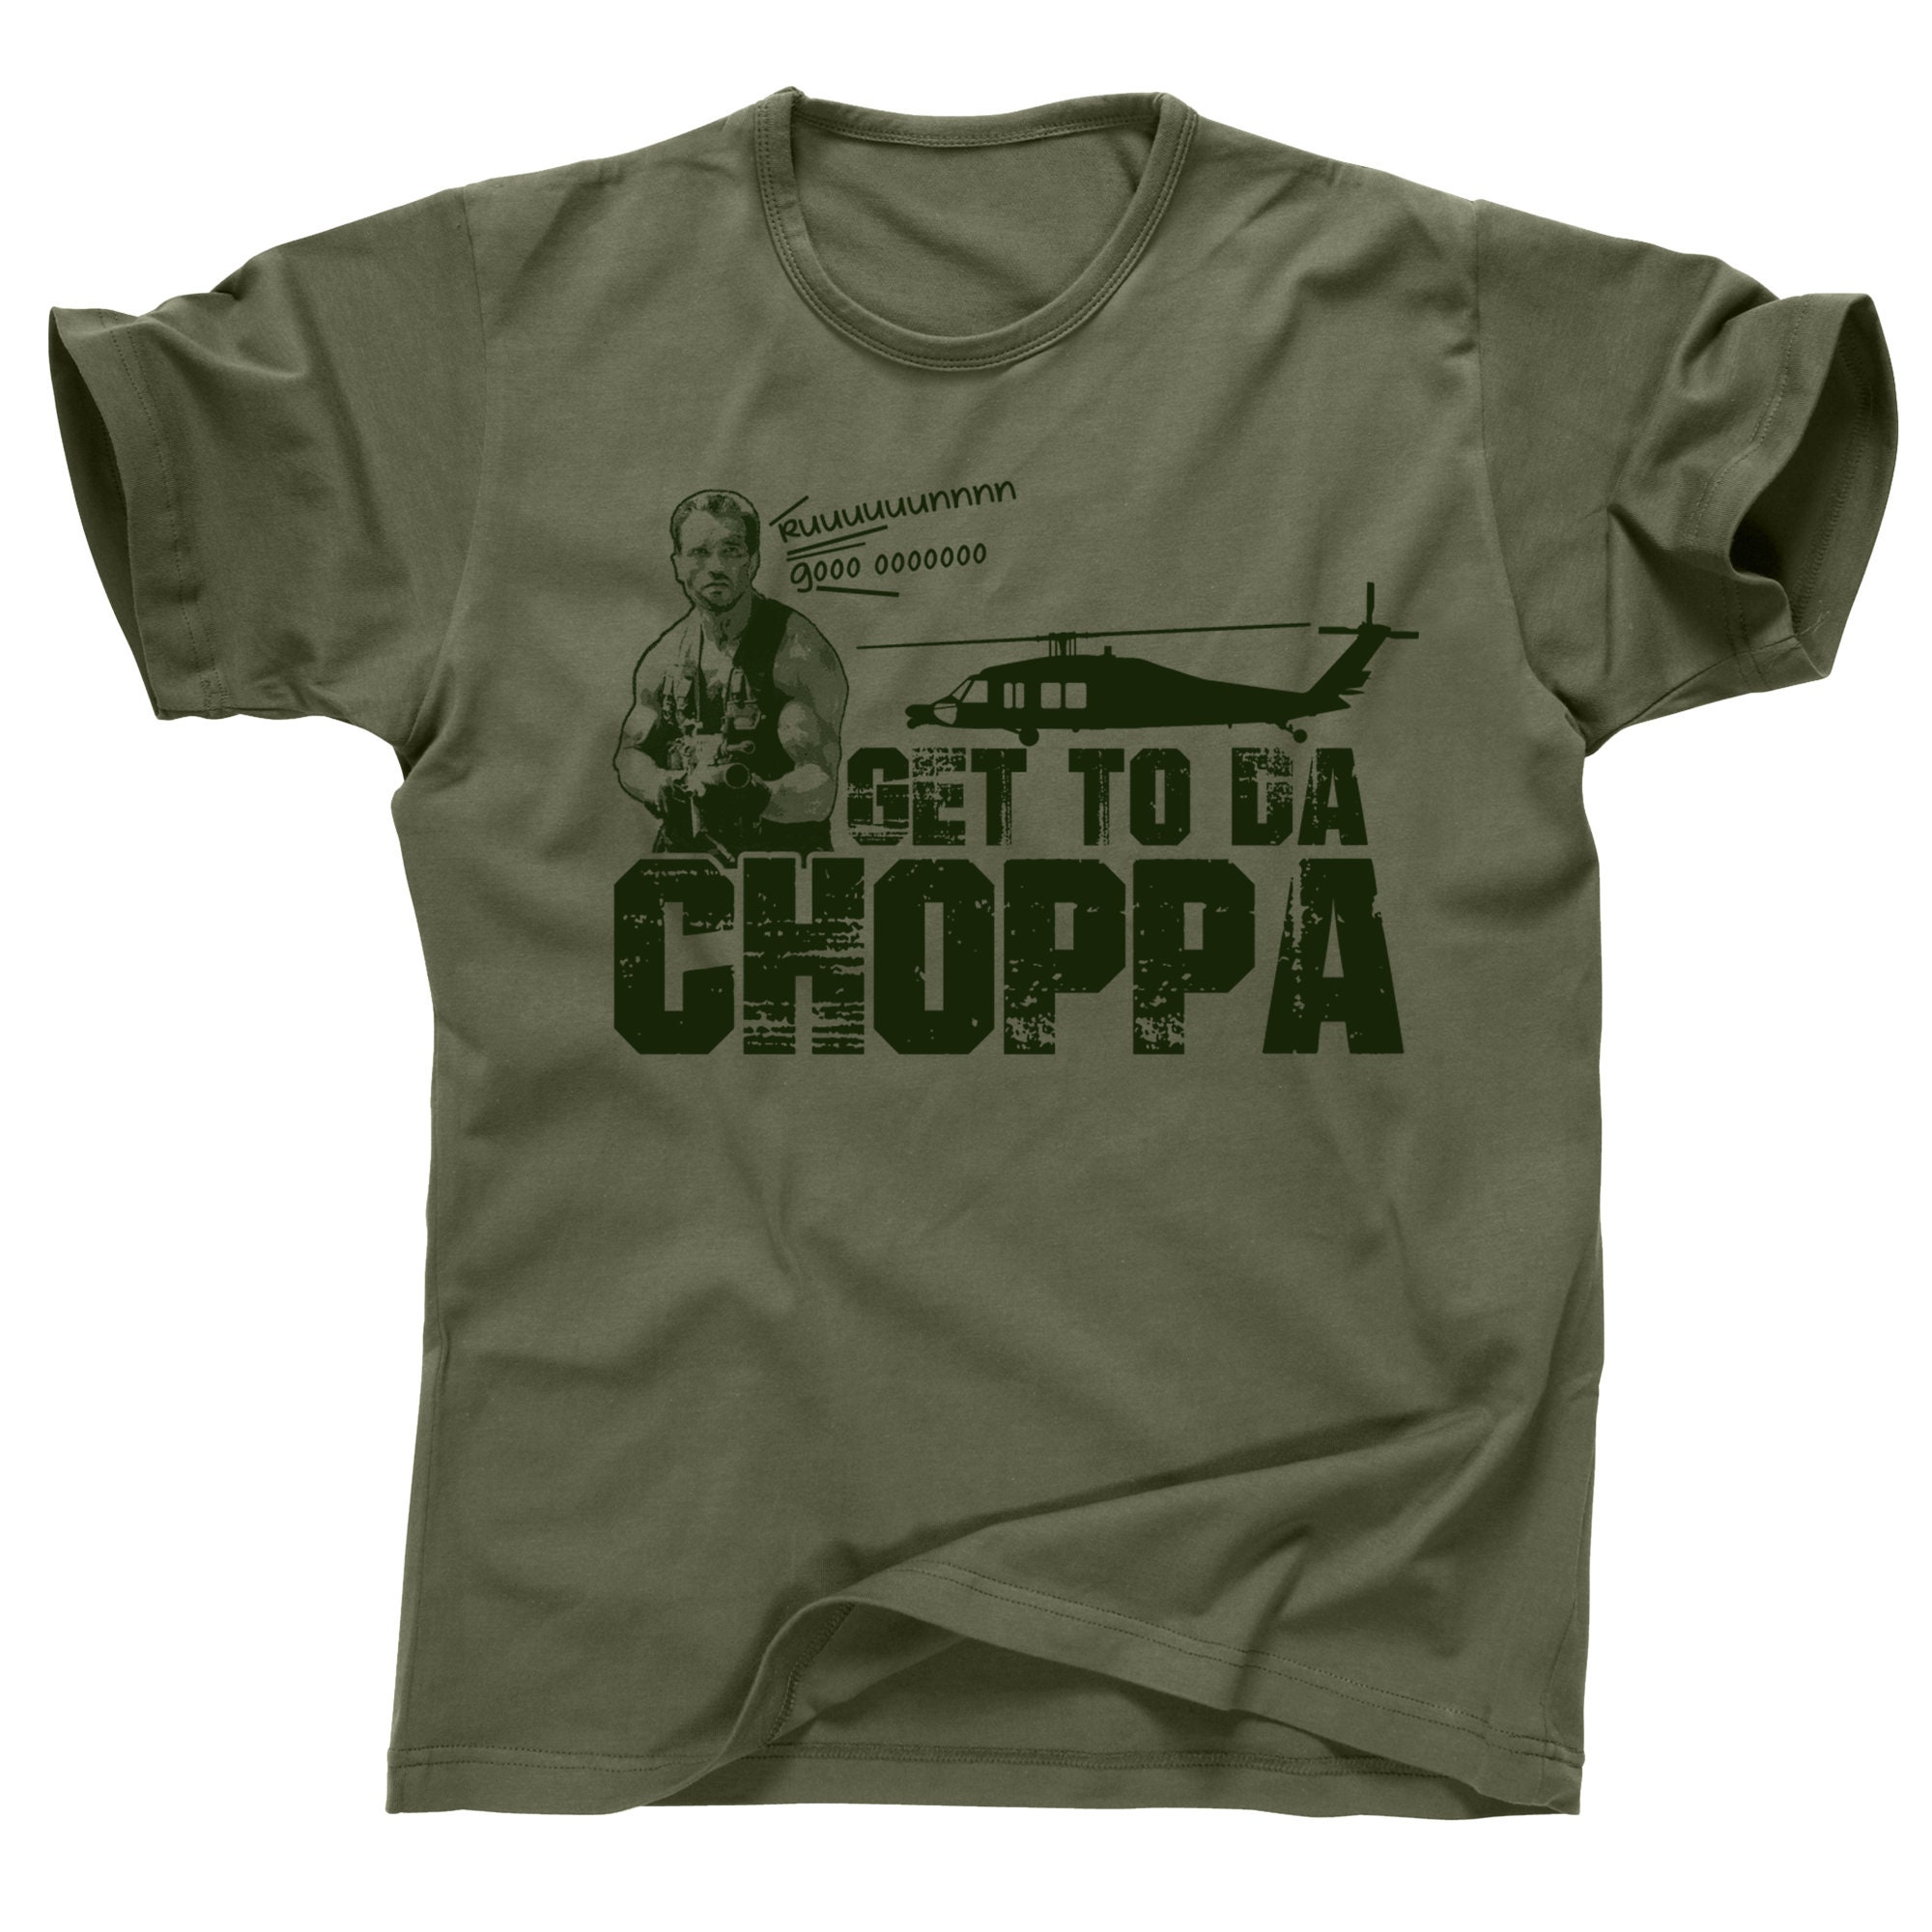 Best Selling The Predator 2 3 Arnold Schwarzenegger get to the da choppa  chopper dvd tee T-Shirt 